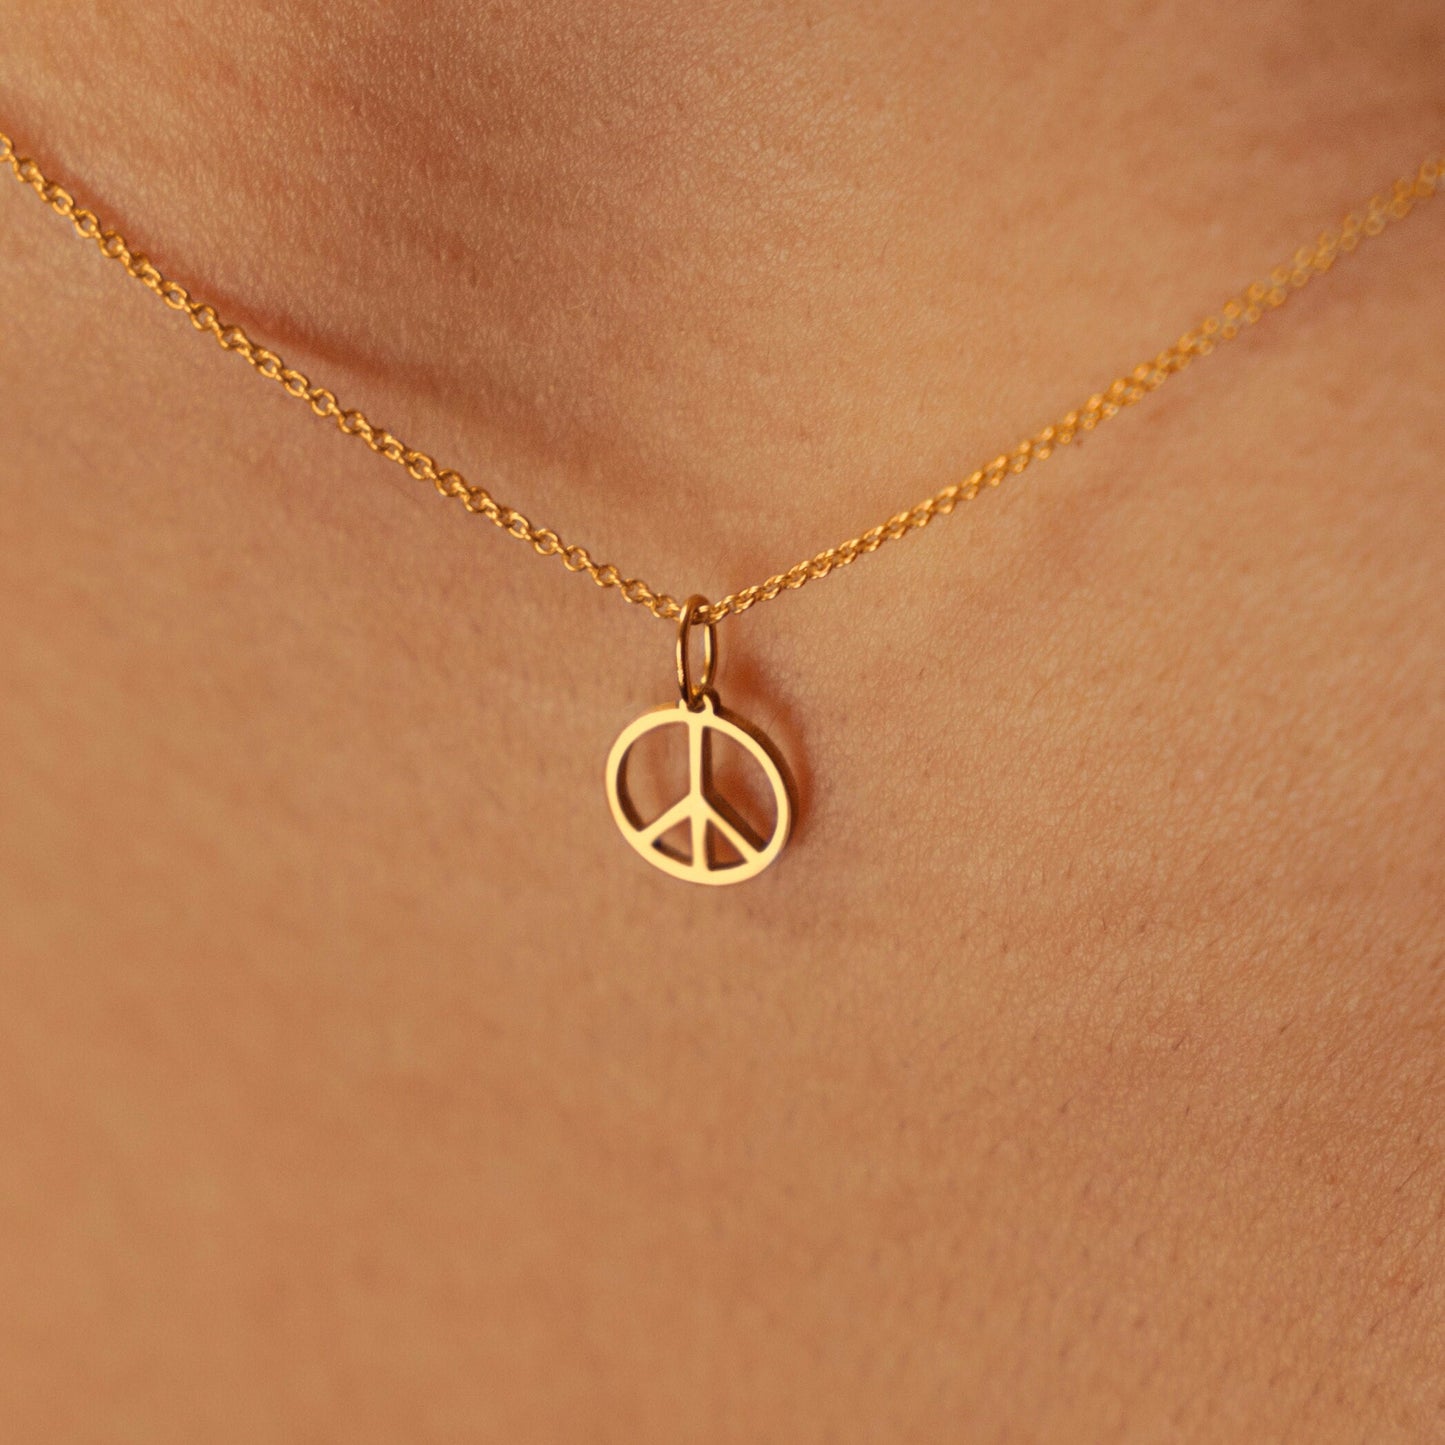 Peace Sign Necklace Pendant